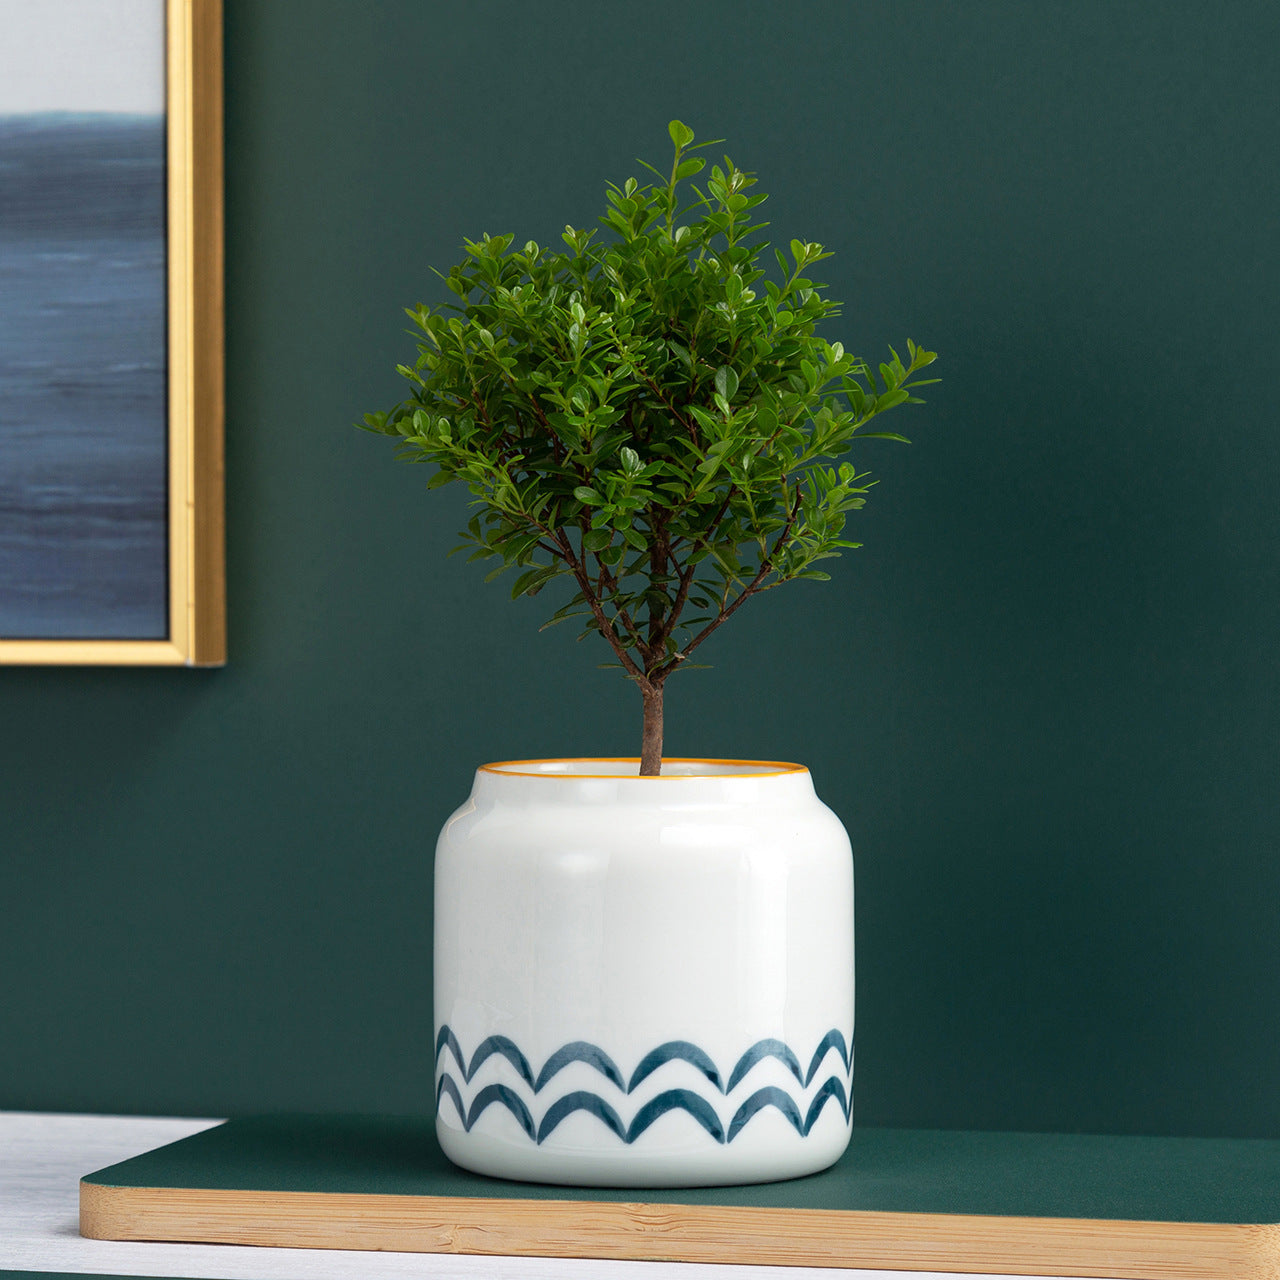 Vasi di ceramica per piante grasse per ambienti interni – AllaRicerca Shop